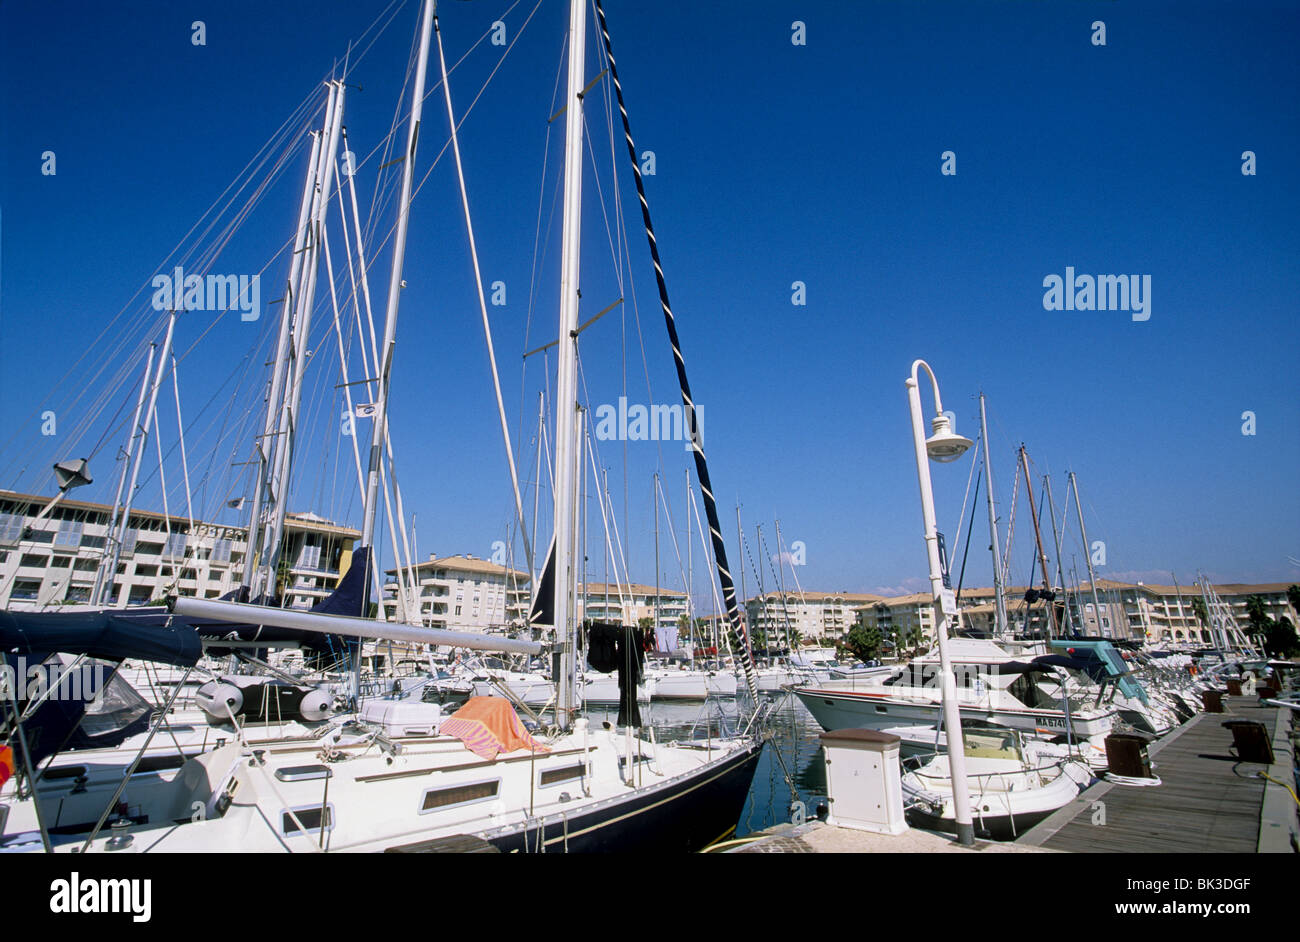 The modern and new marina of Frejus Stock Photo - Alamy